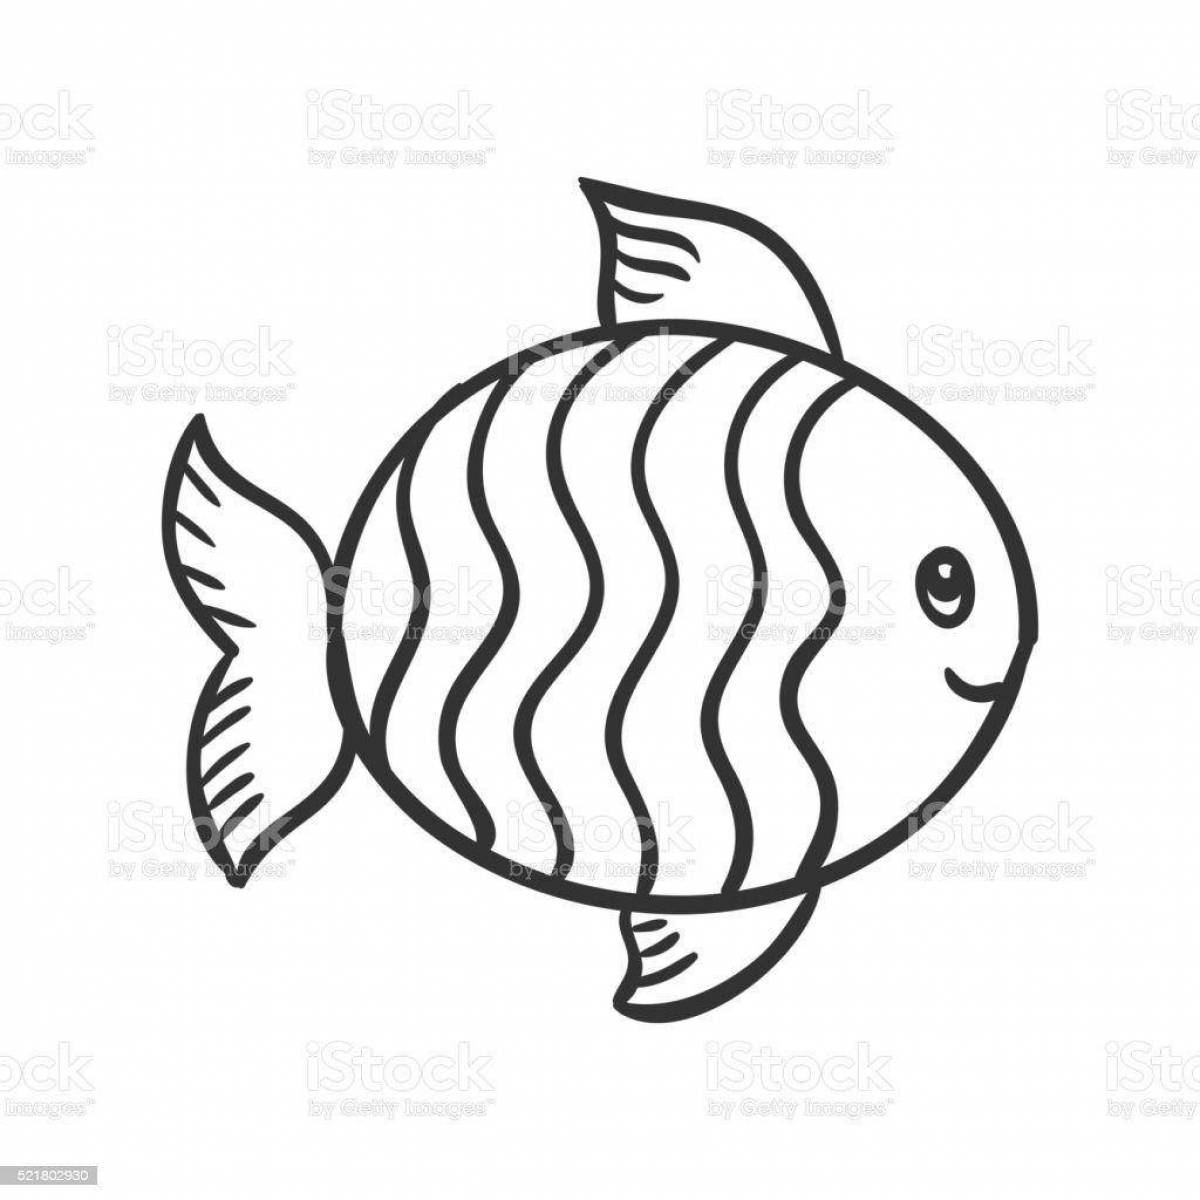 Раскраска великолепная рыба-мандаринка